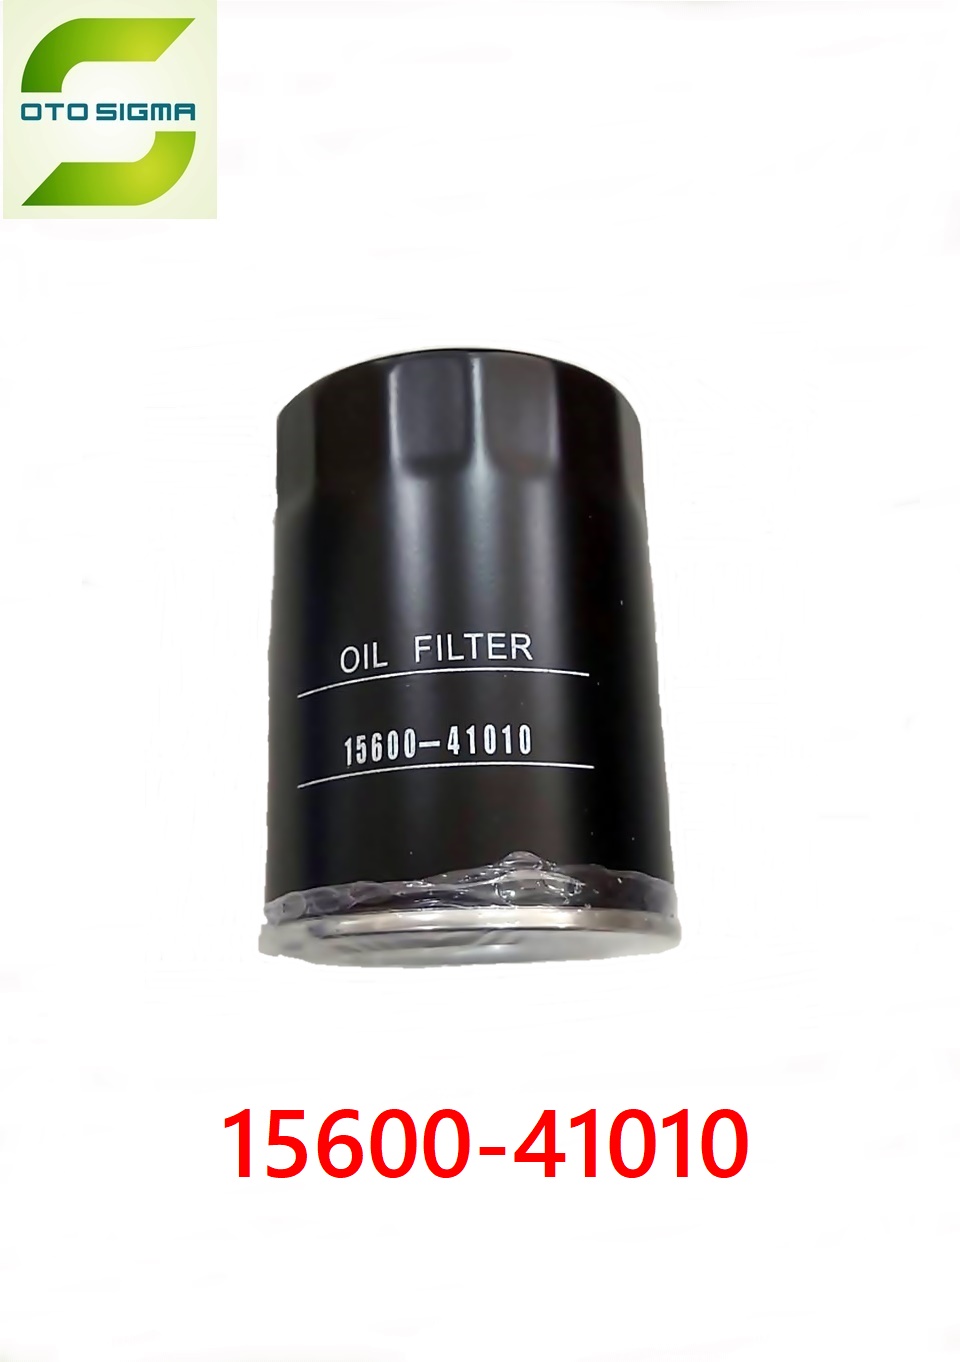  Oil Filter 15600-41010-15600-41010